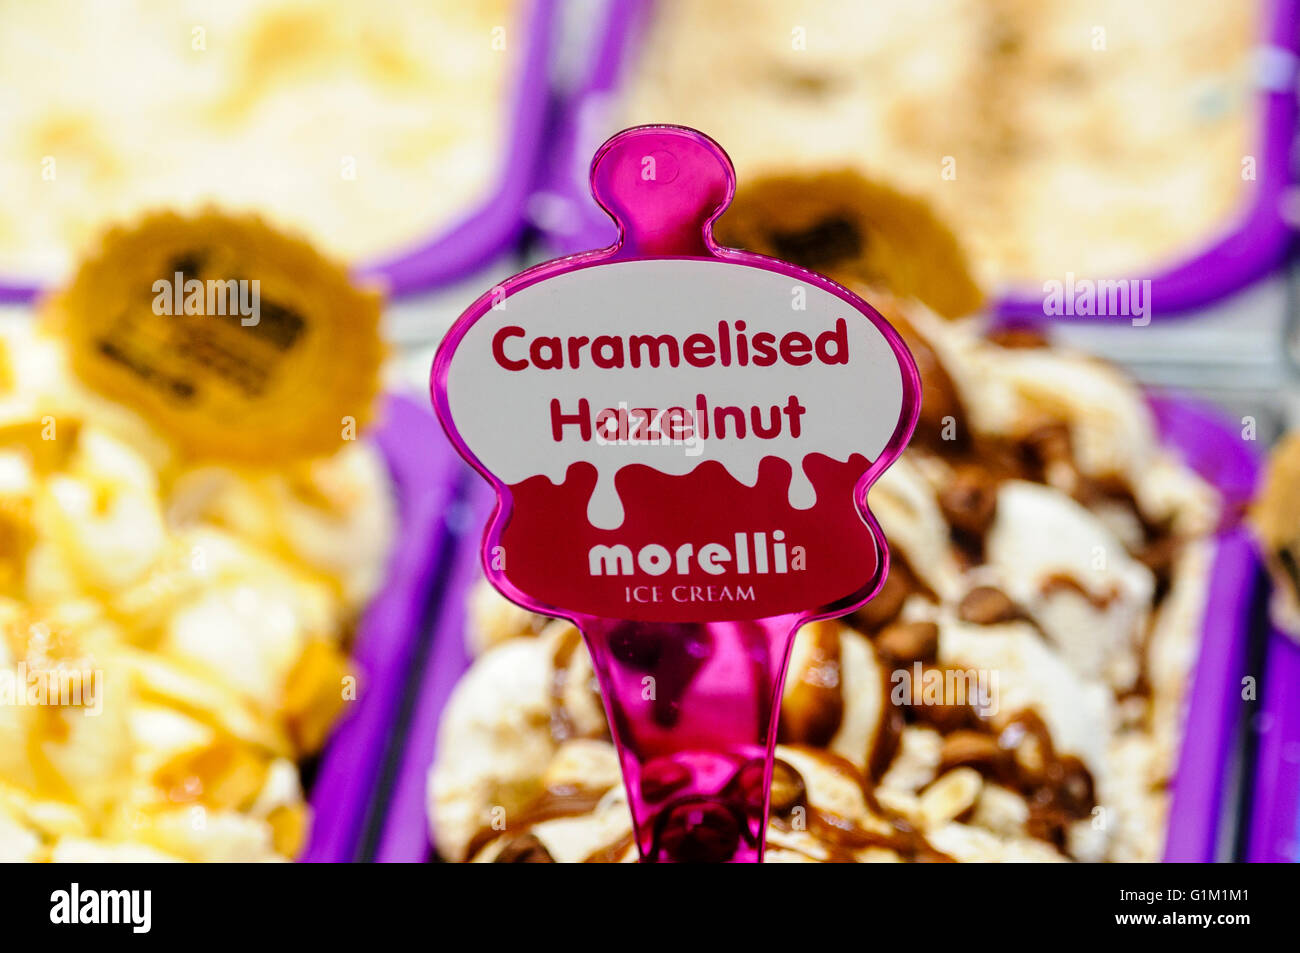 https://c8.alamy.com/comp/G1M1M1/tub-of-caramelised-hazelnut-ice-cream-from-the-famous-morelli-store-G1M1M1.jpg